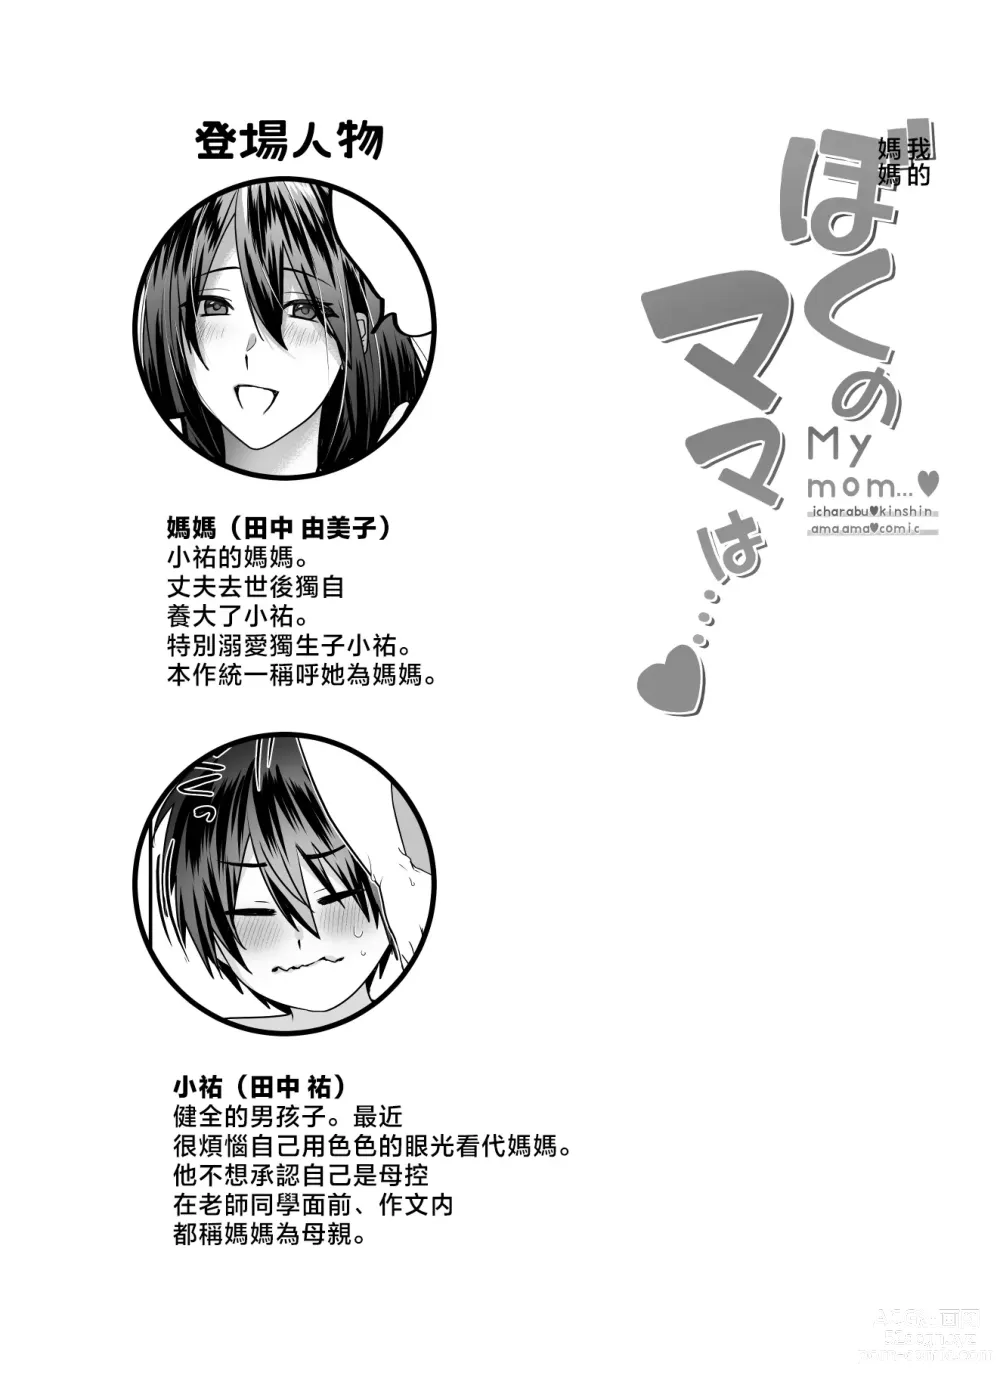 Page 2 of doujinshi 我的媽媽...♥